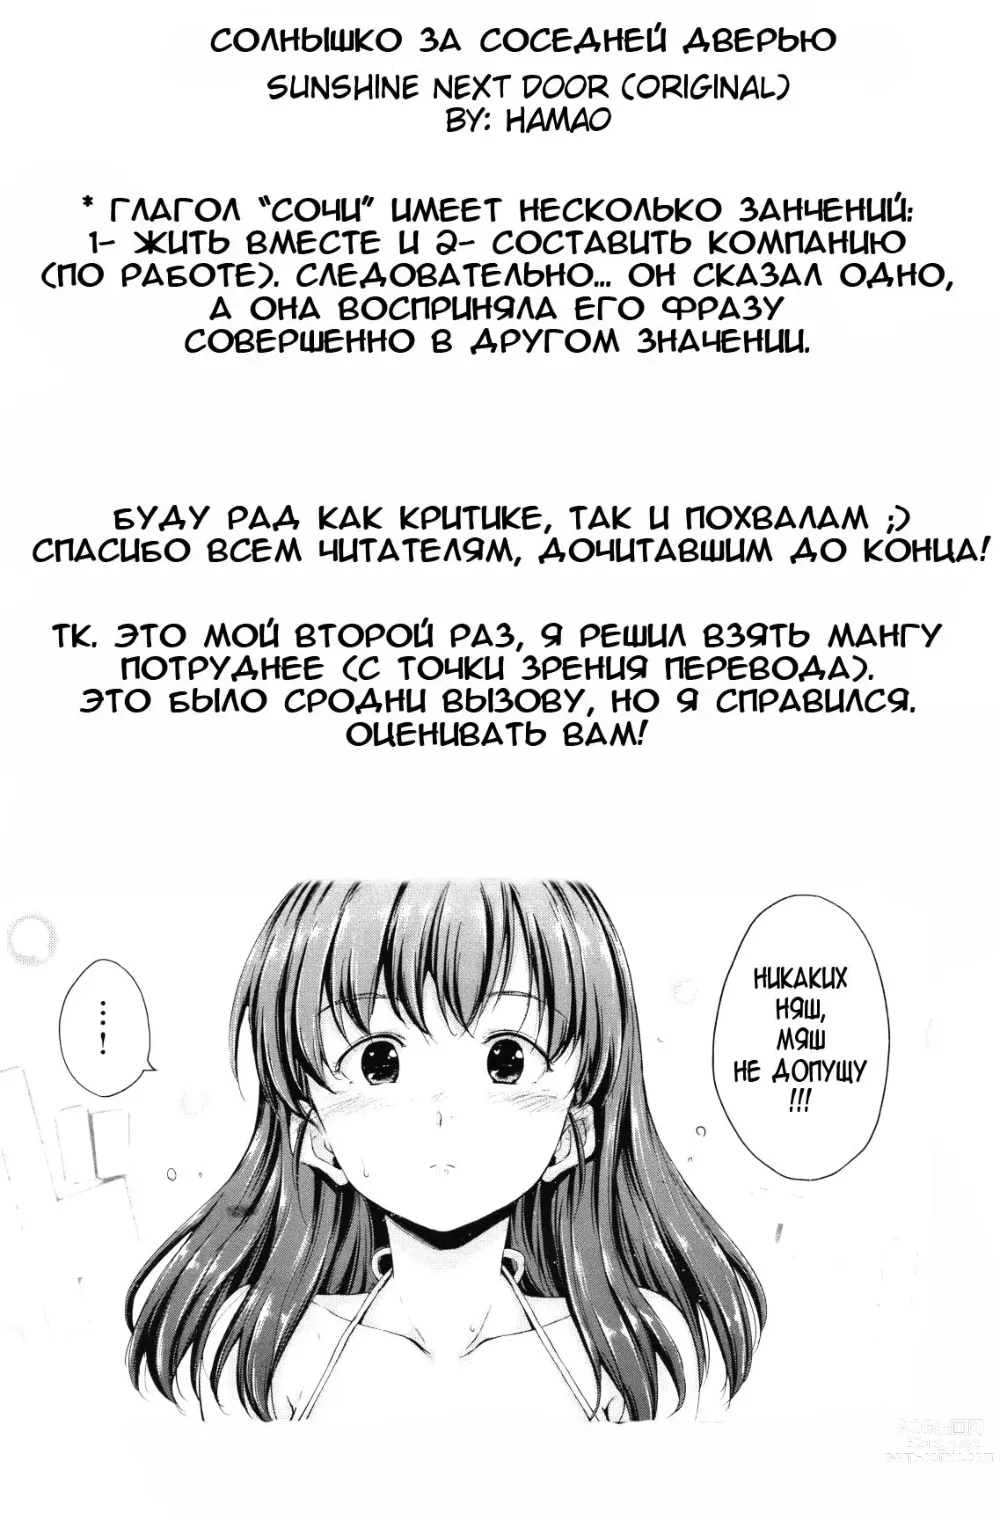 Page 17 of manga Солнышко за соседней дверью